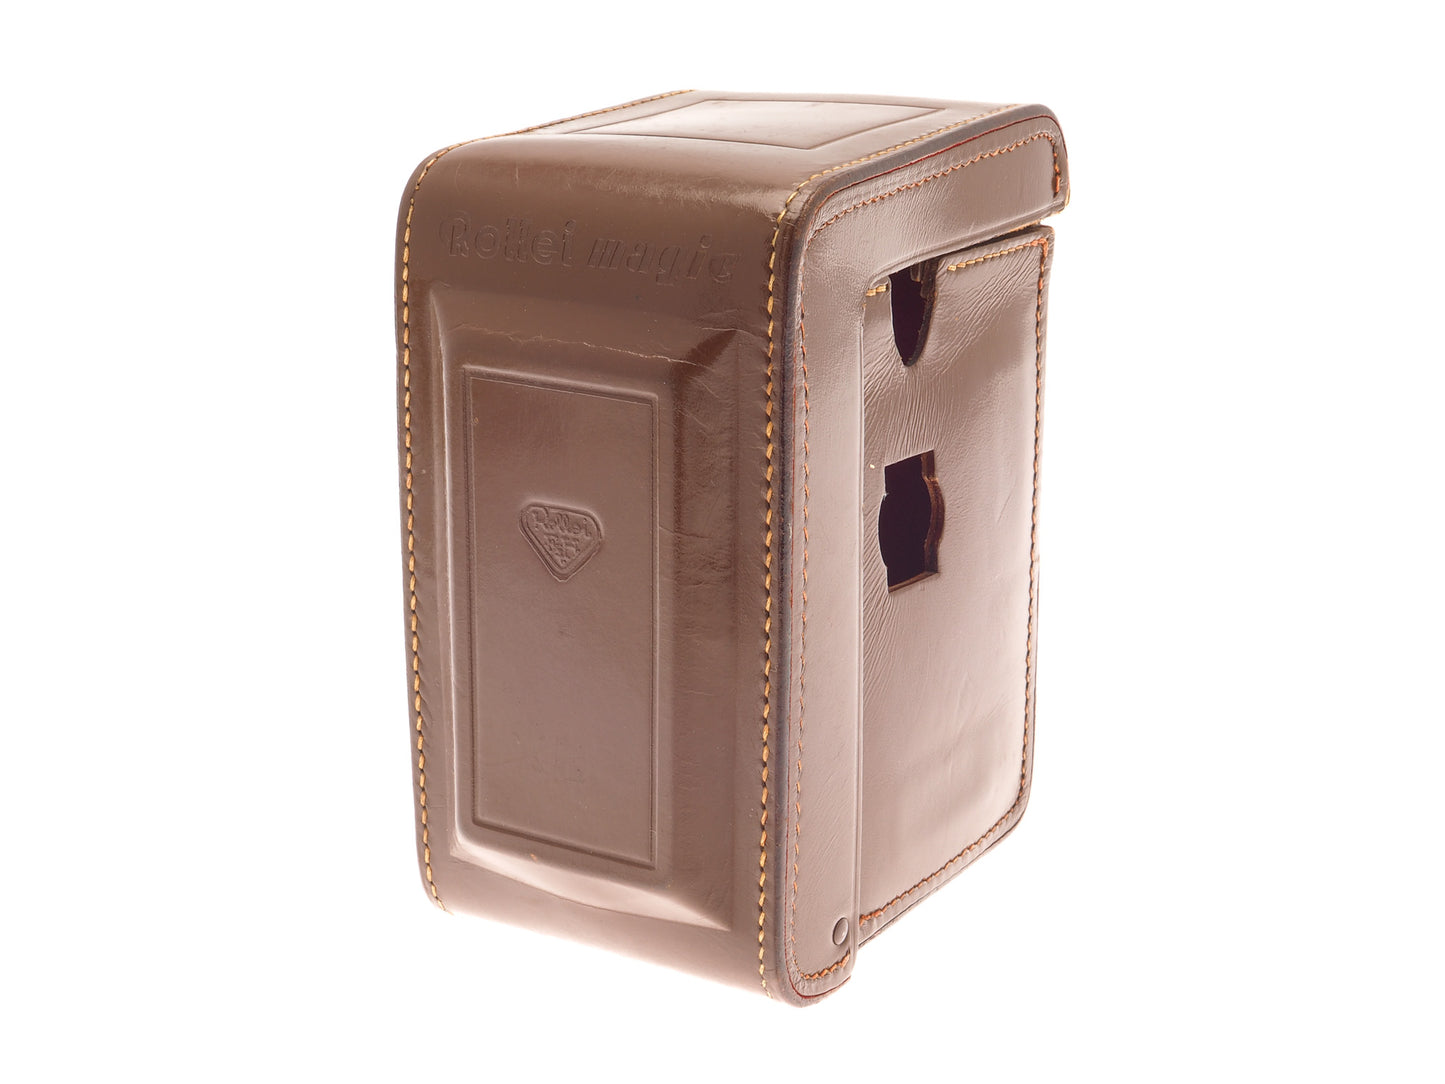 Rollei Magic Leather Case - Accessory